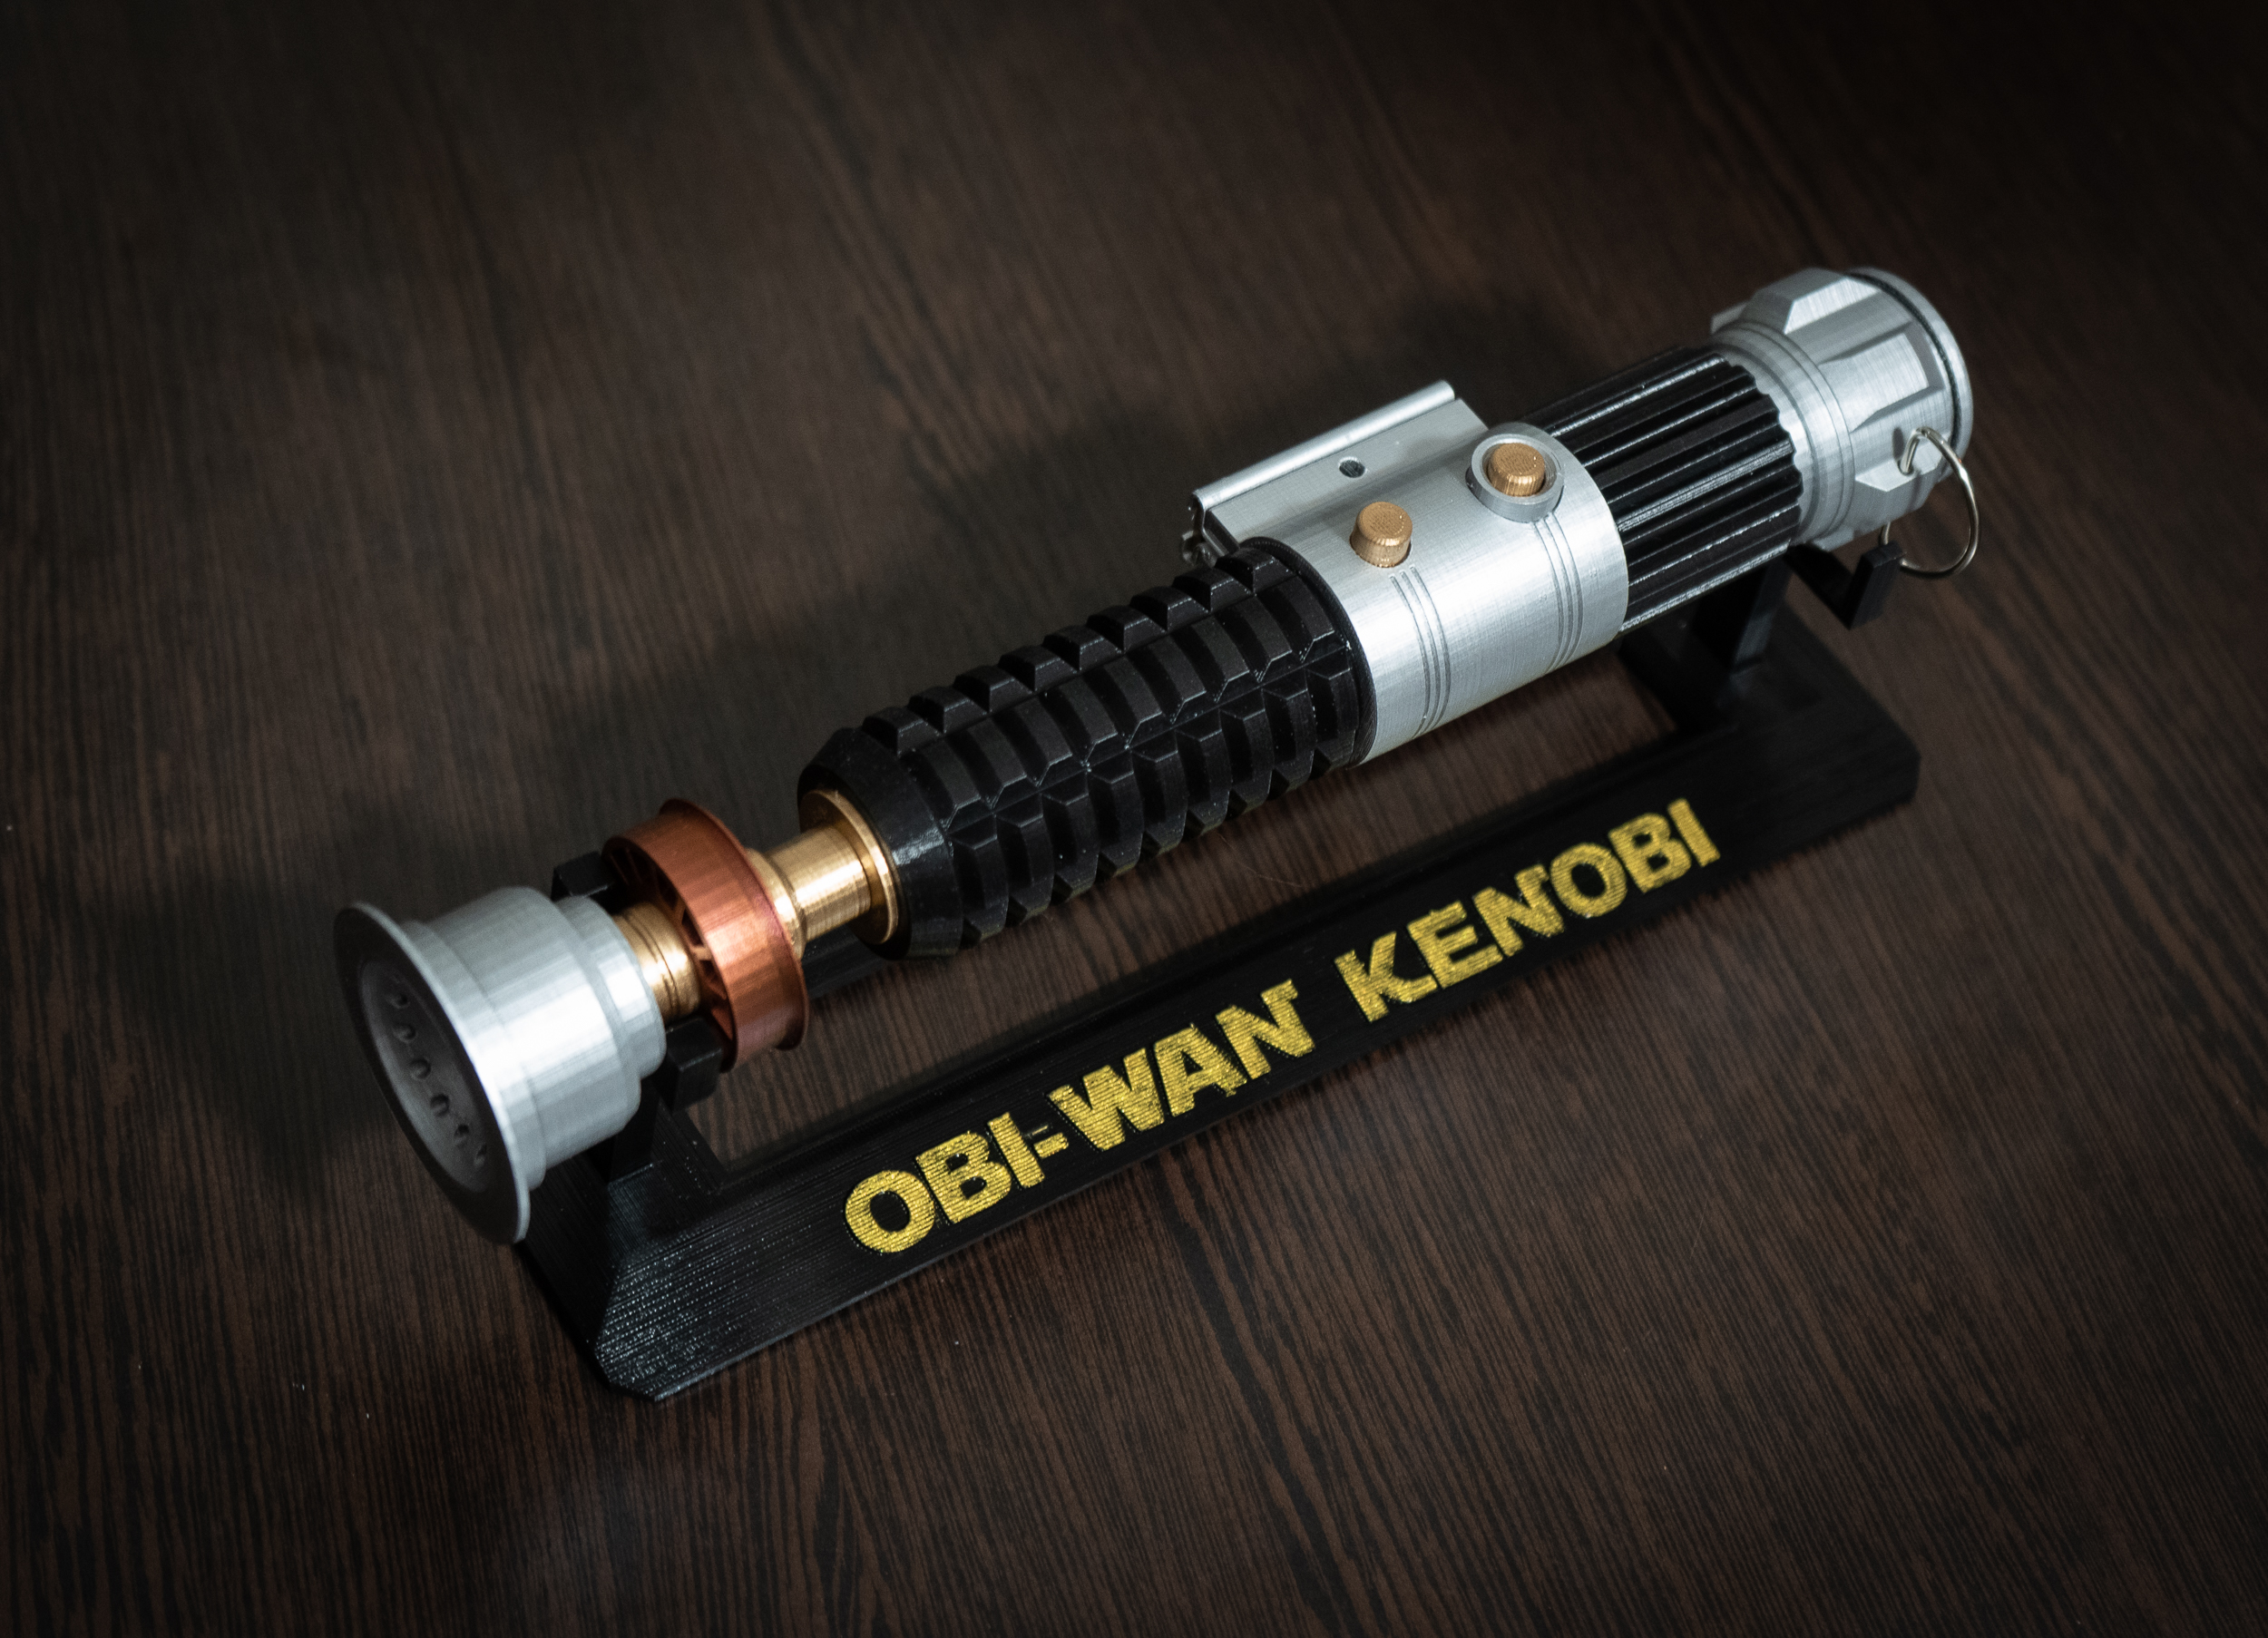 obi wan kenobi clone wars lightsaber